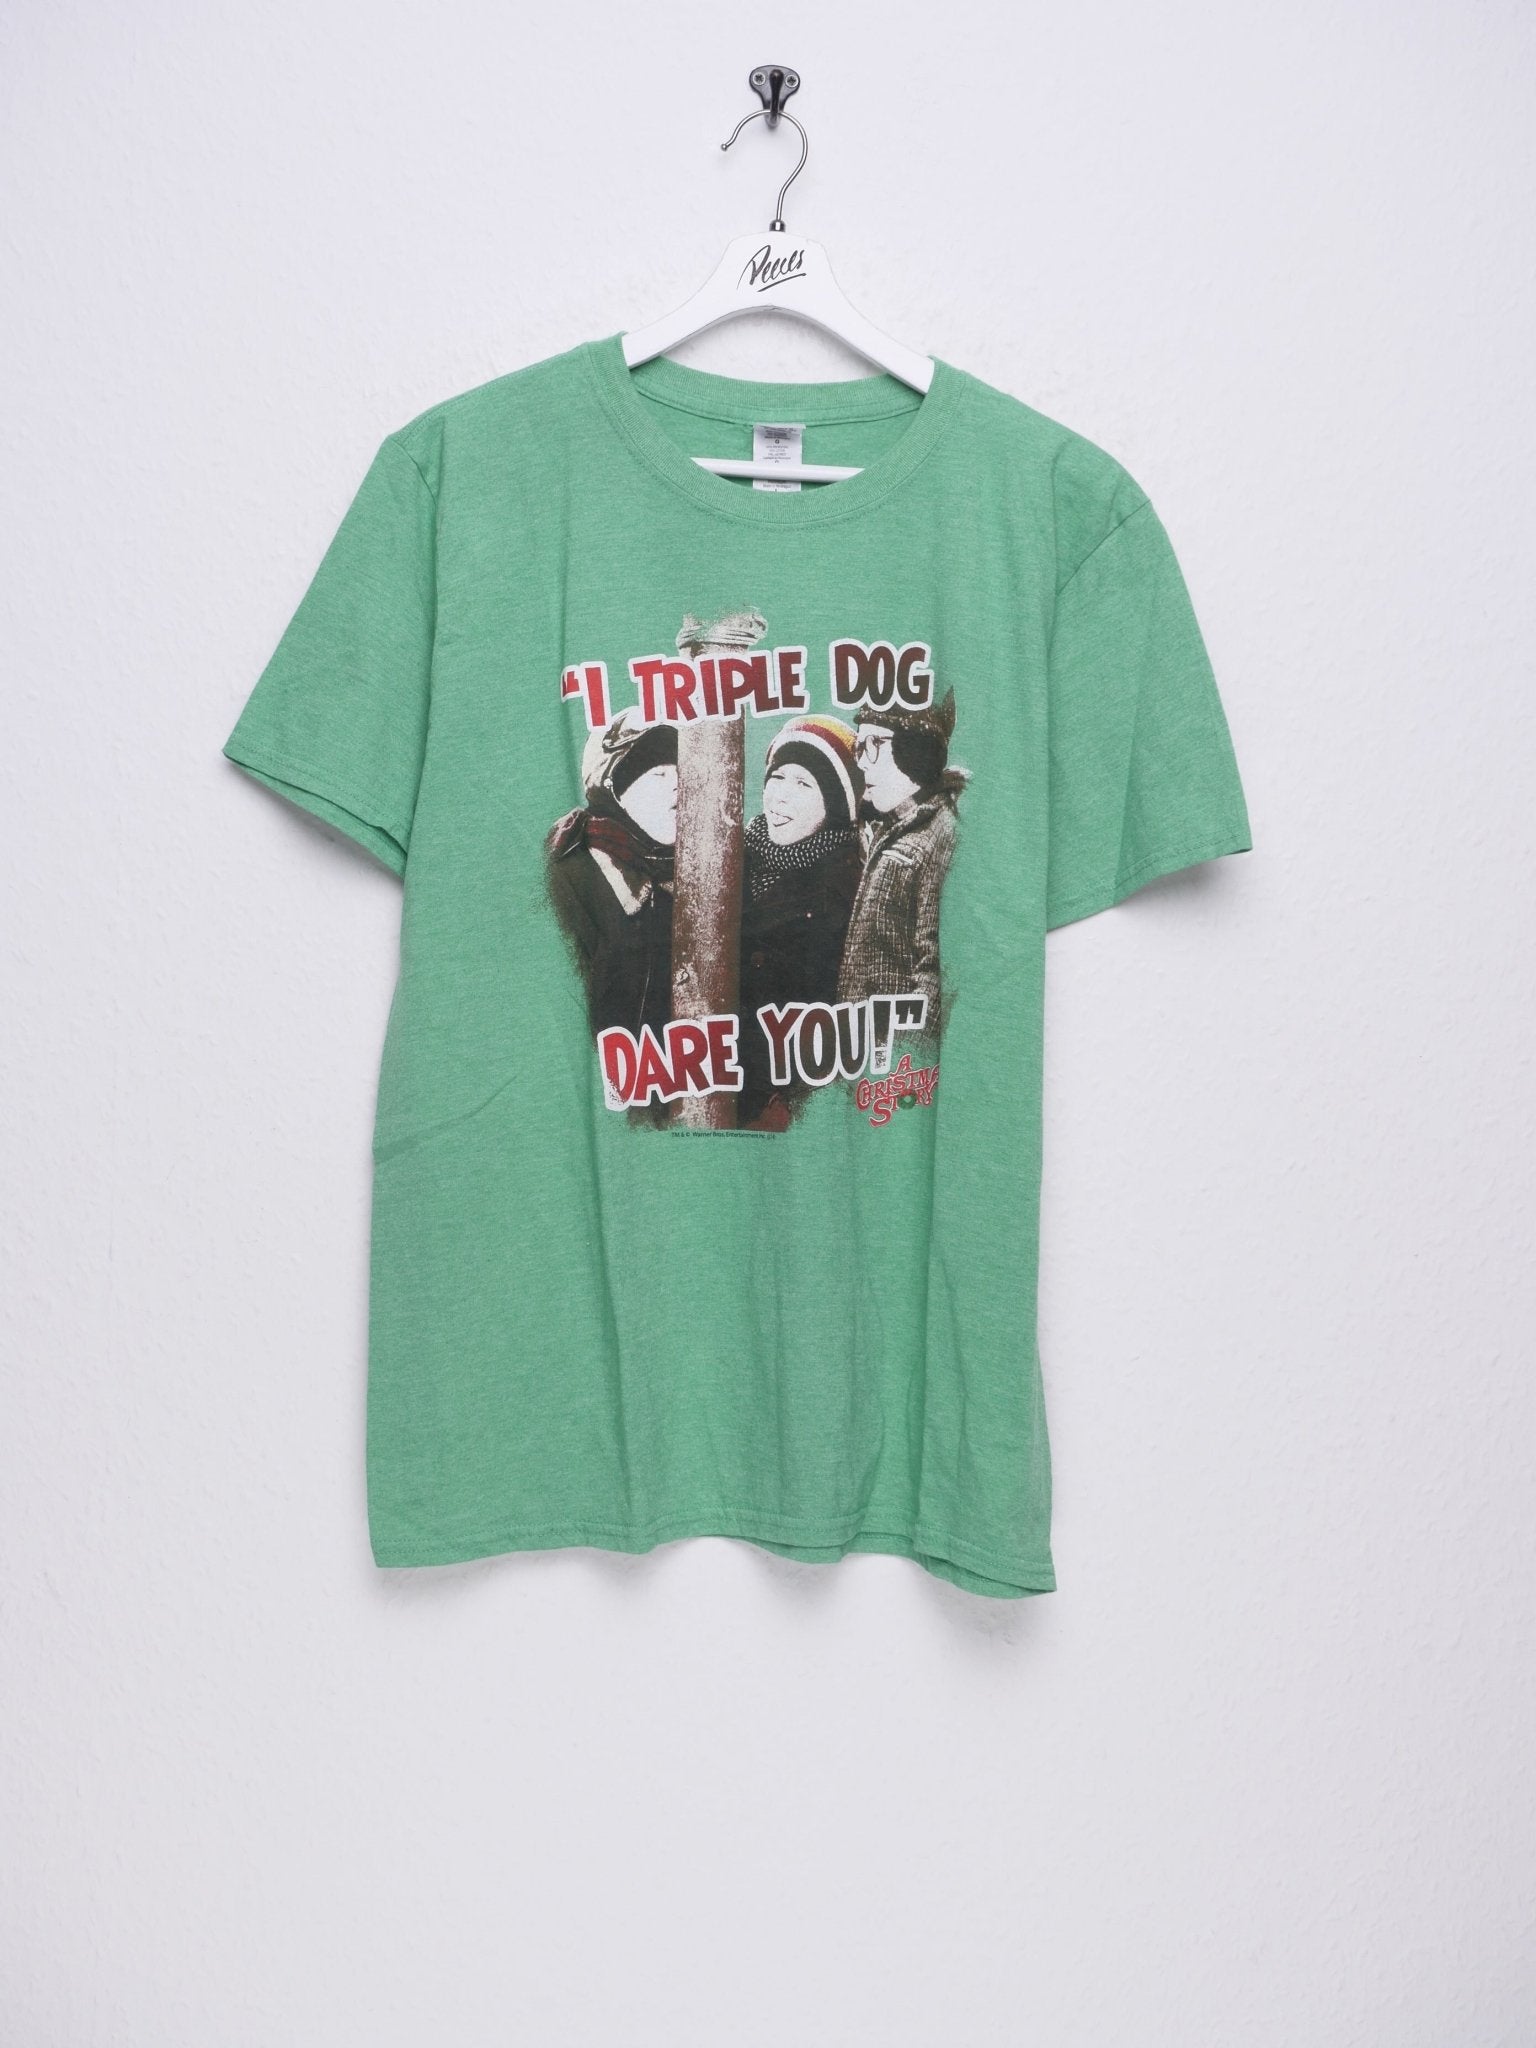 I Triple Dog Dare You! printed Graphic green Shirt - Peeces